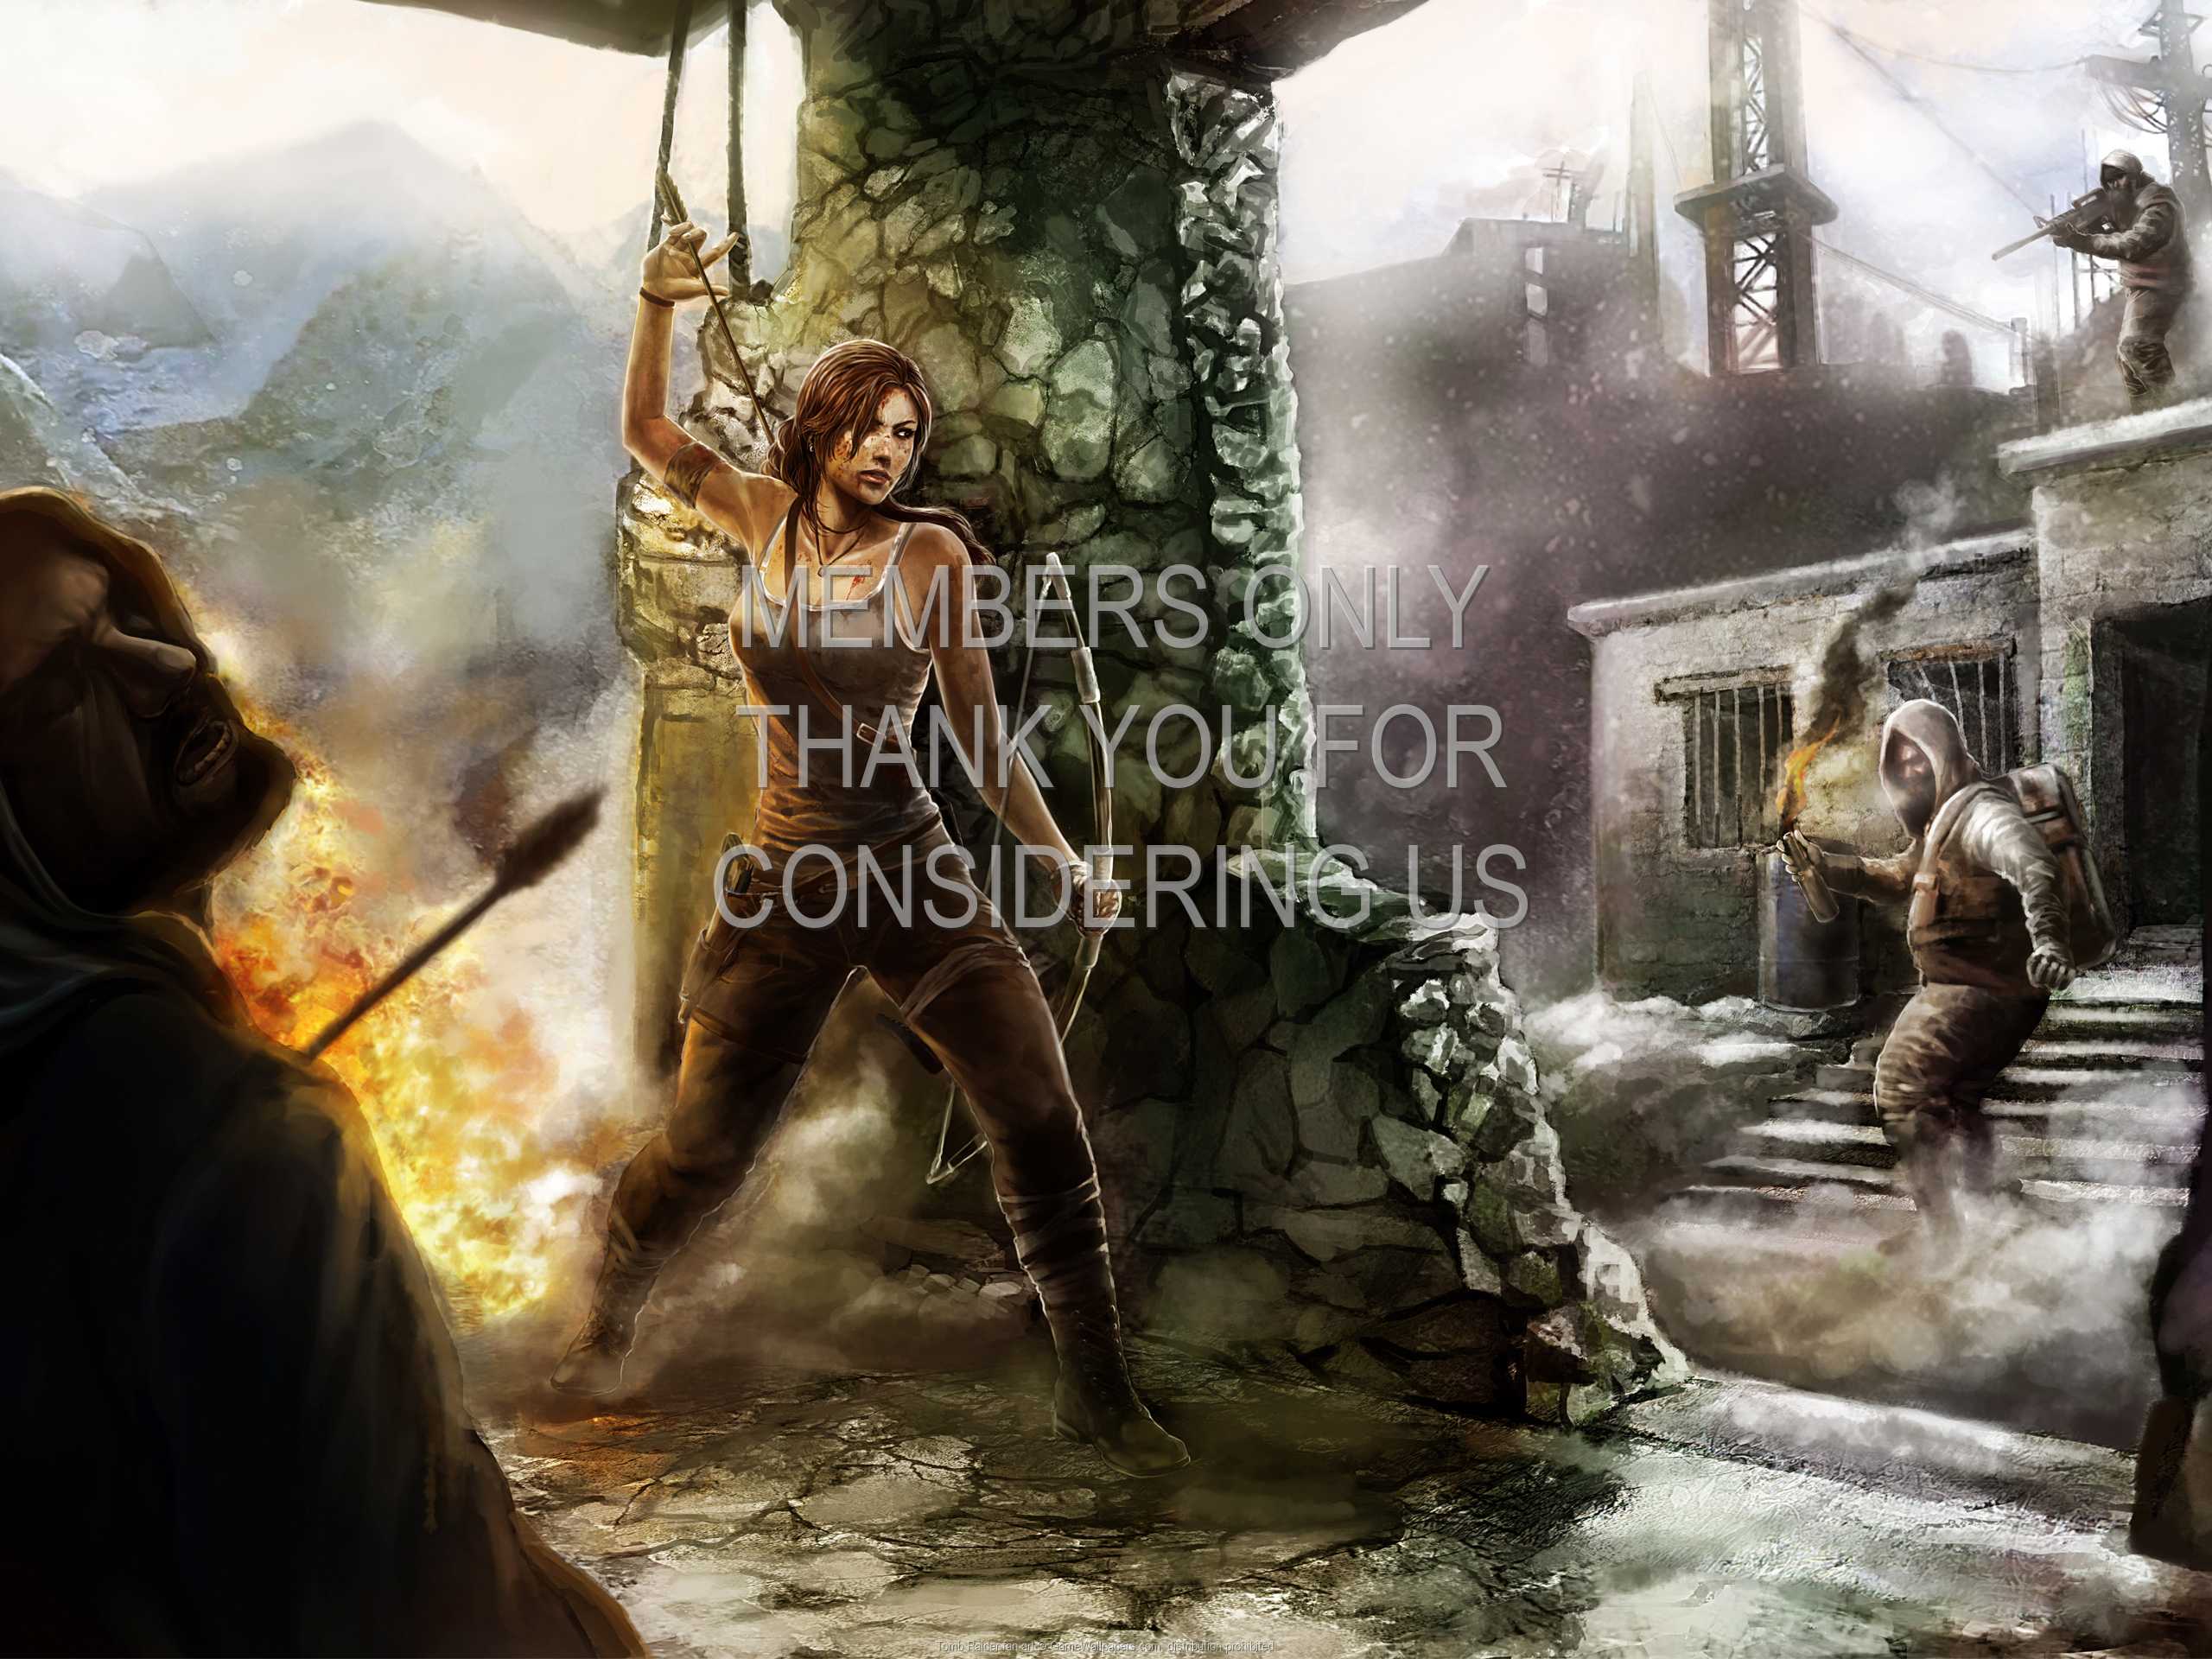 Tomb Raider fan art 1080p Horizontal Mobile wallpaper or background 02